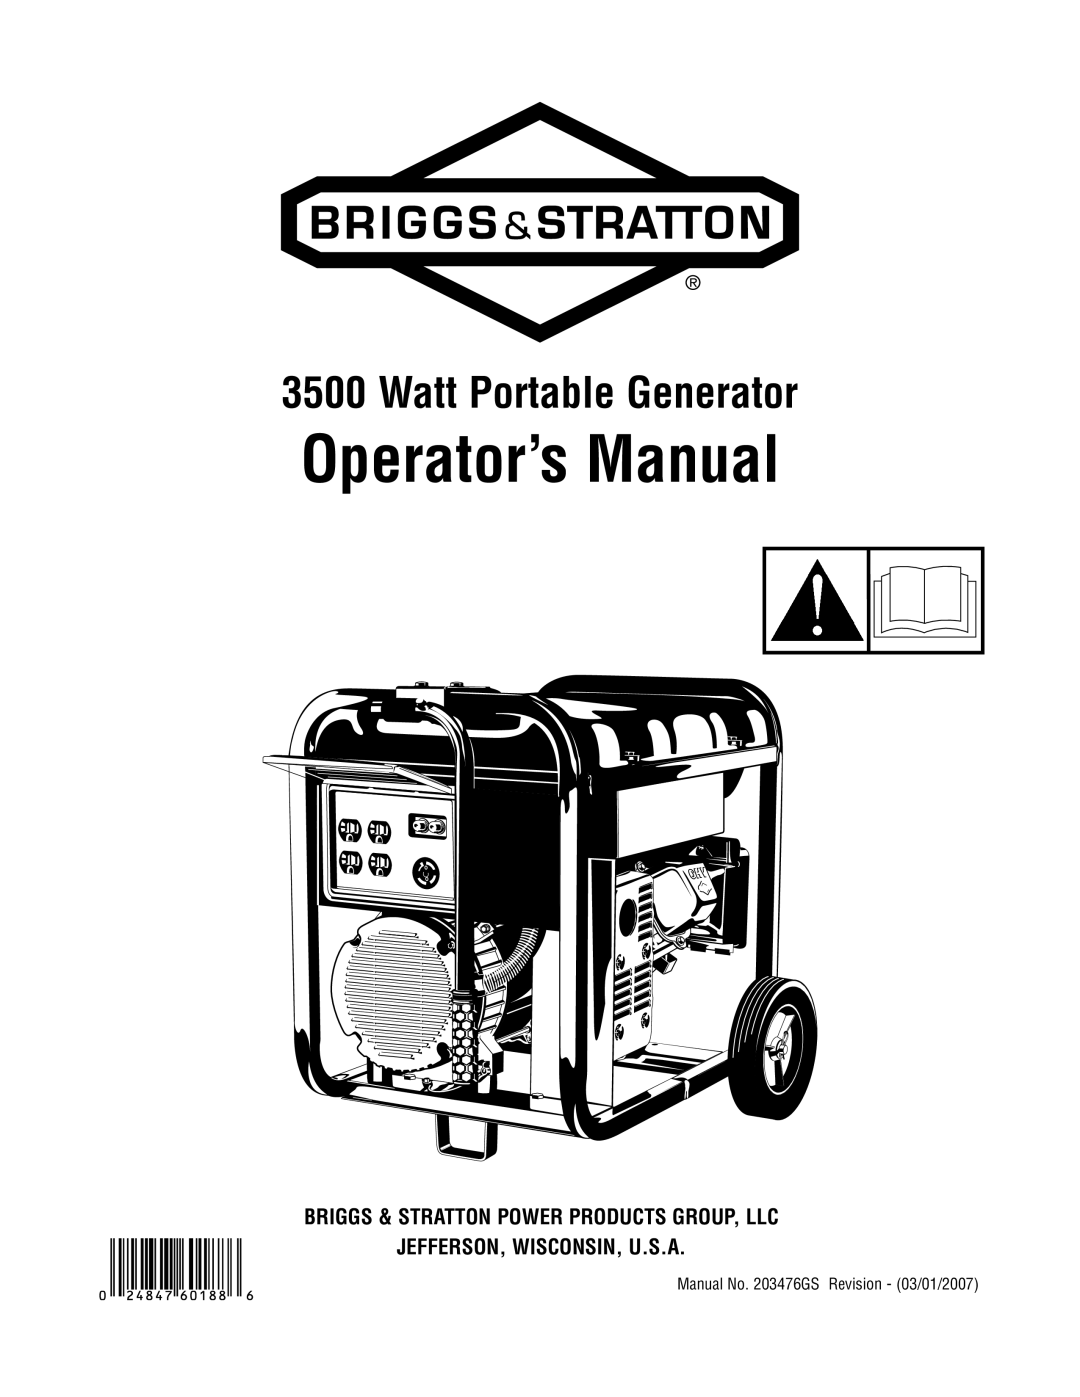 Briggs & Stratton 030248-0 manual Operator’s Manual, Watt Portable Generator, Briggs & Stratton Power Products Group, Llc 